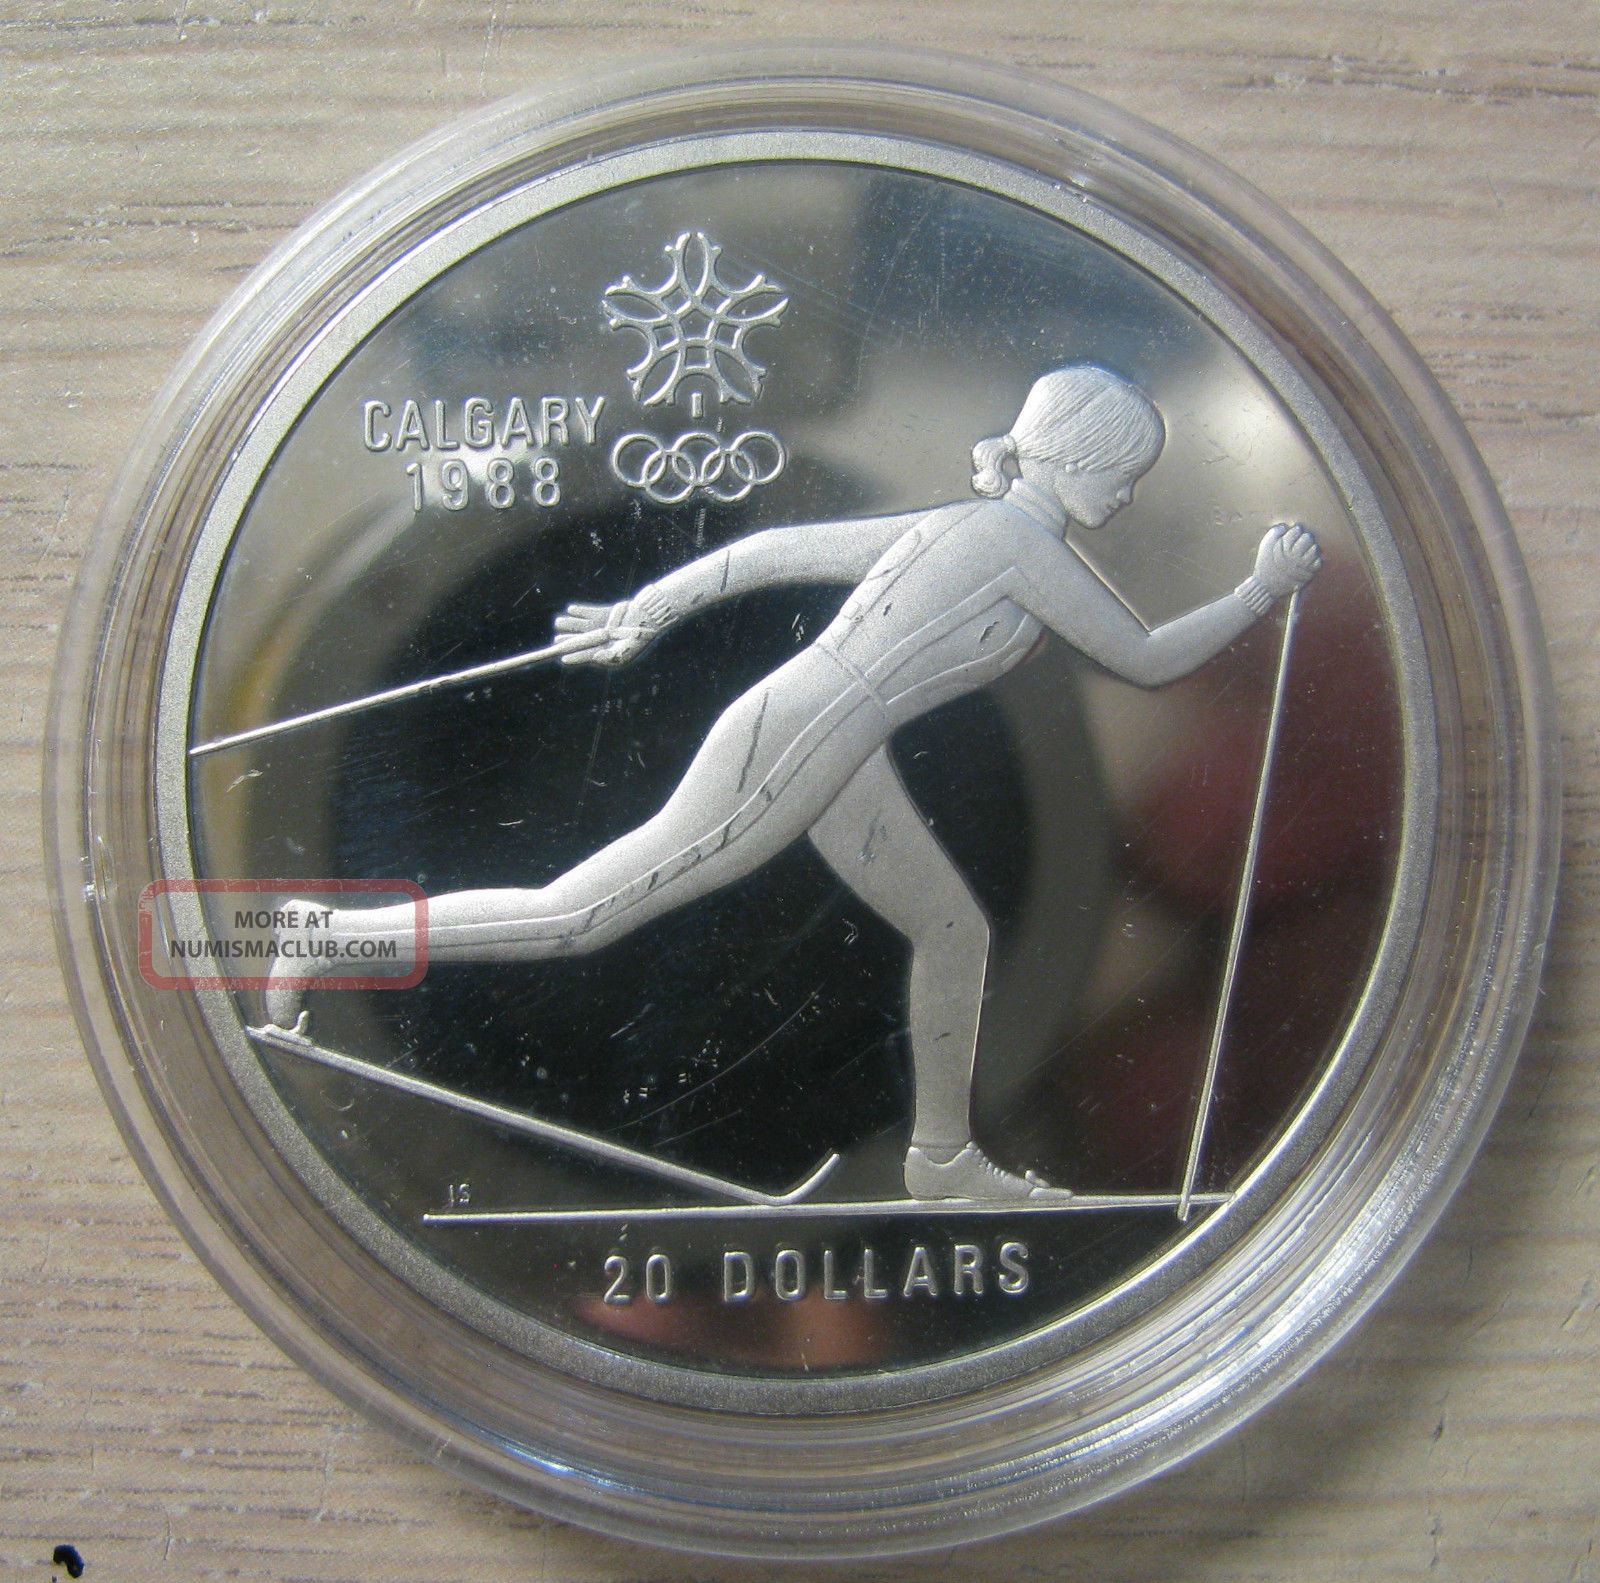 1986 Proof $20 1988 Calgary Olympics - Cross Country Skiing Canada Coin